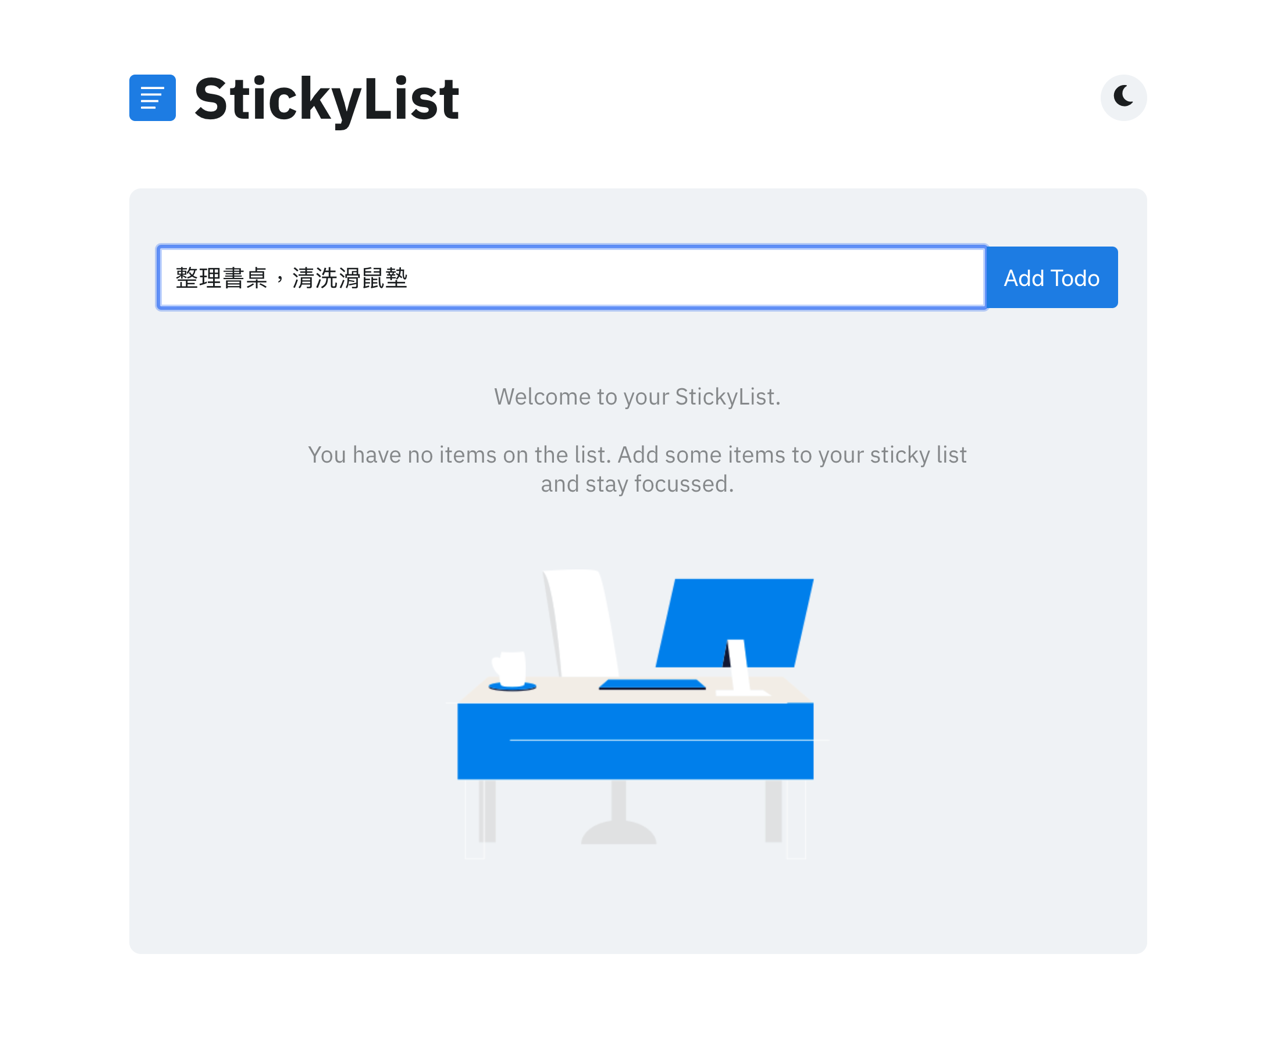 StickyList